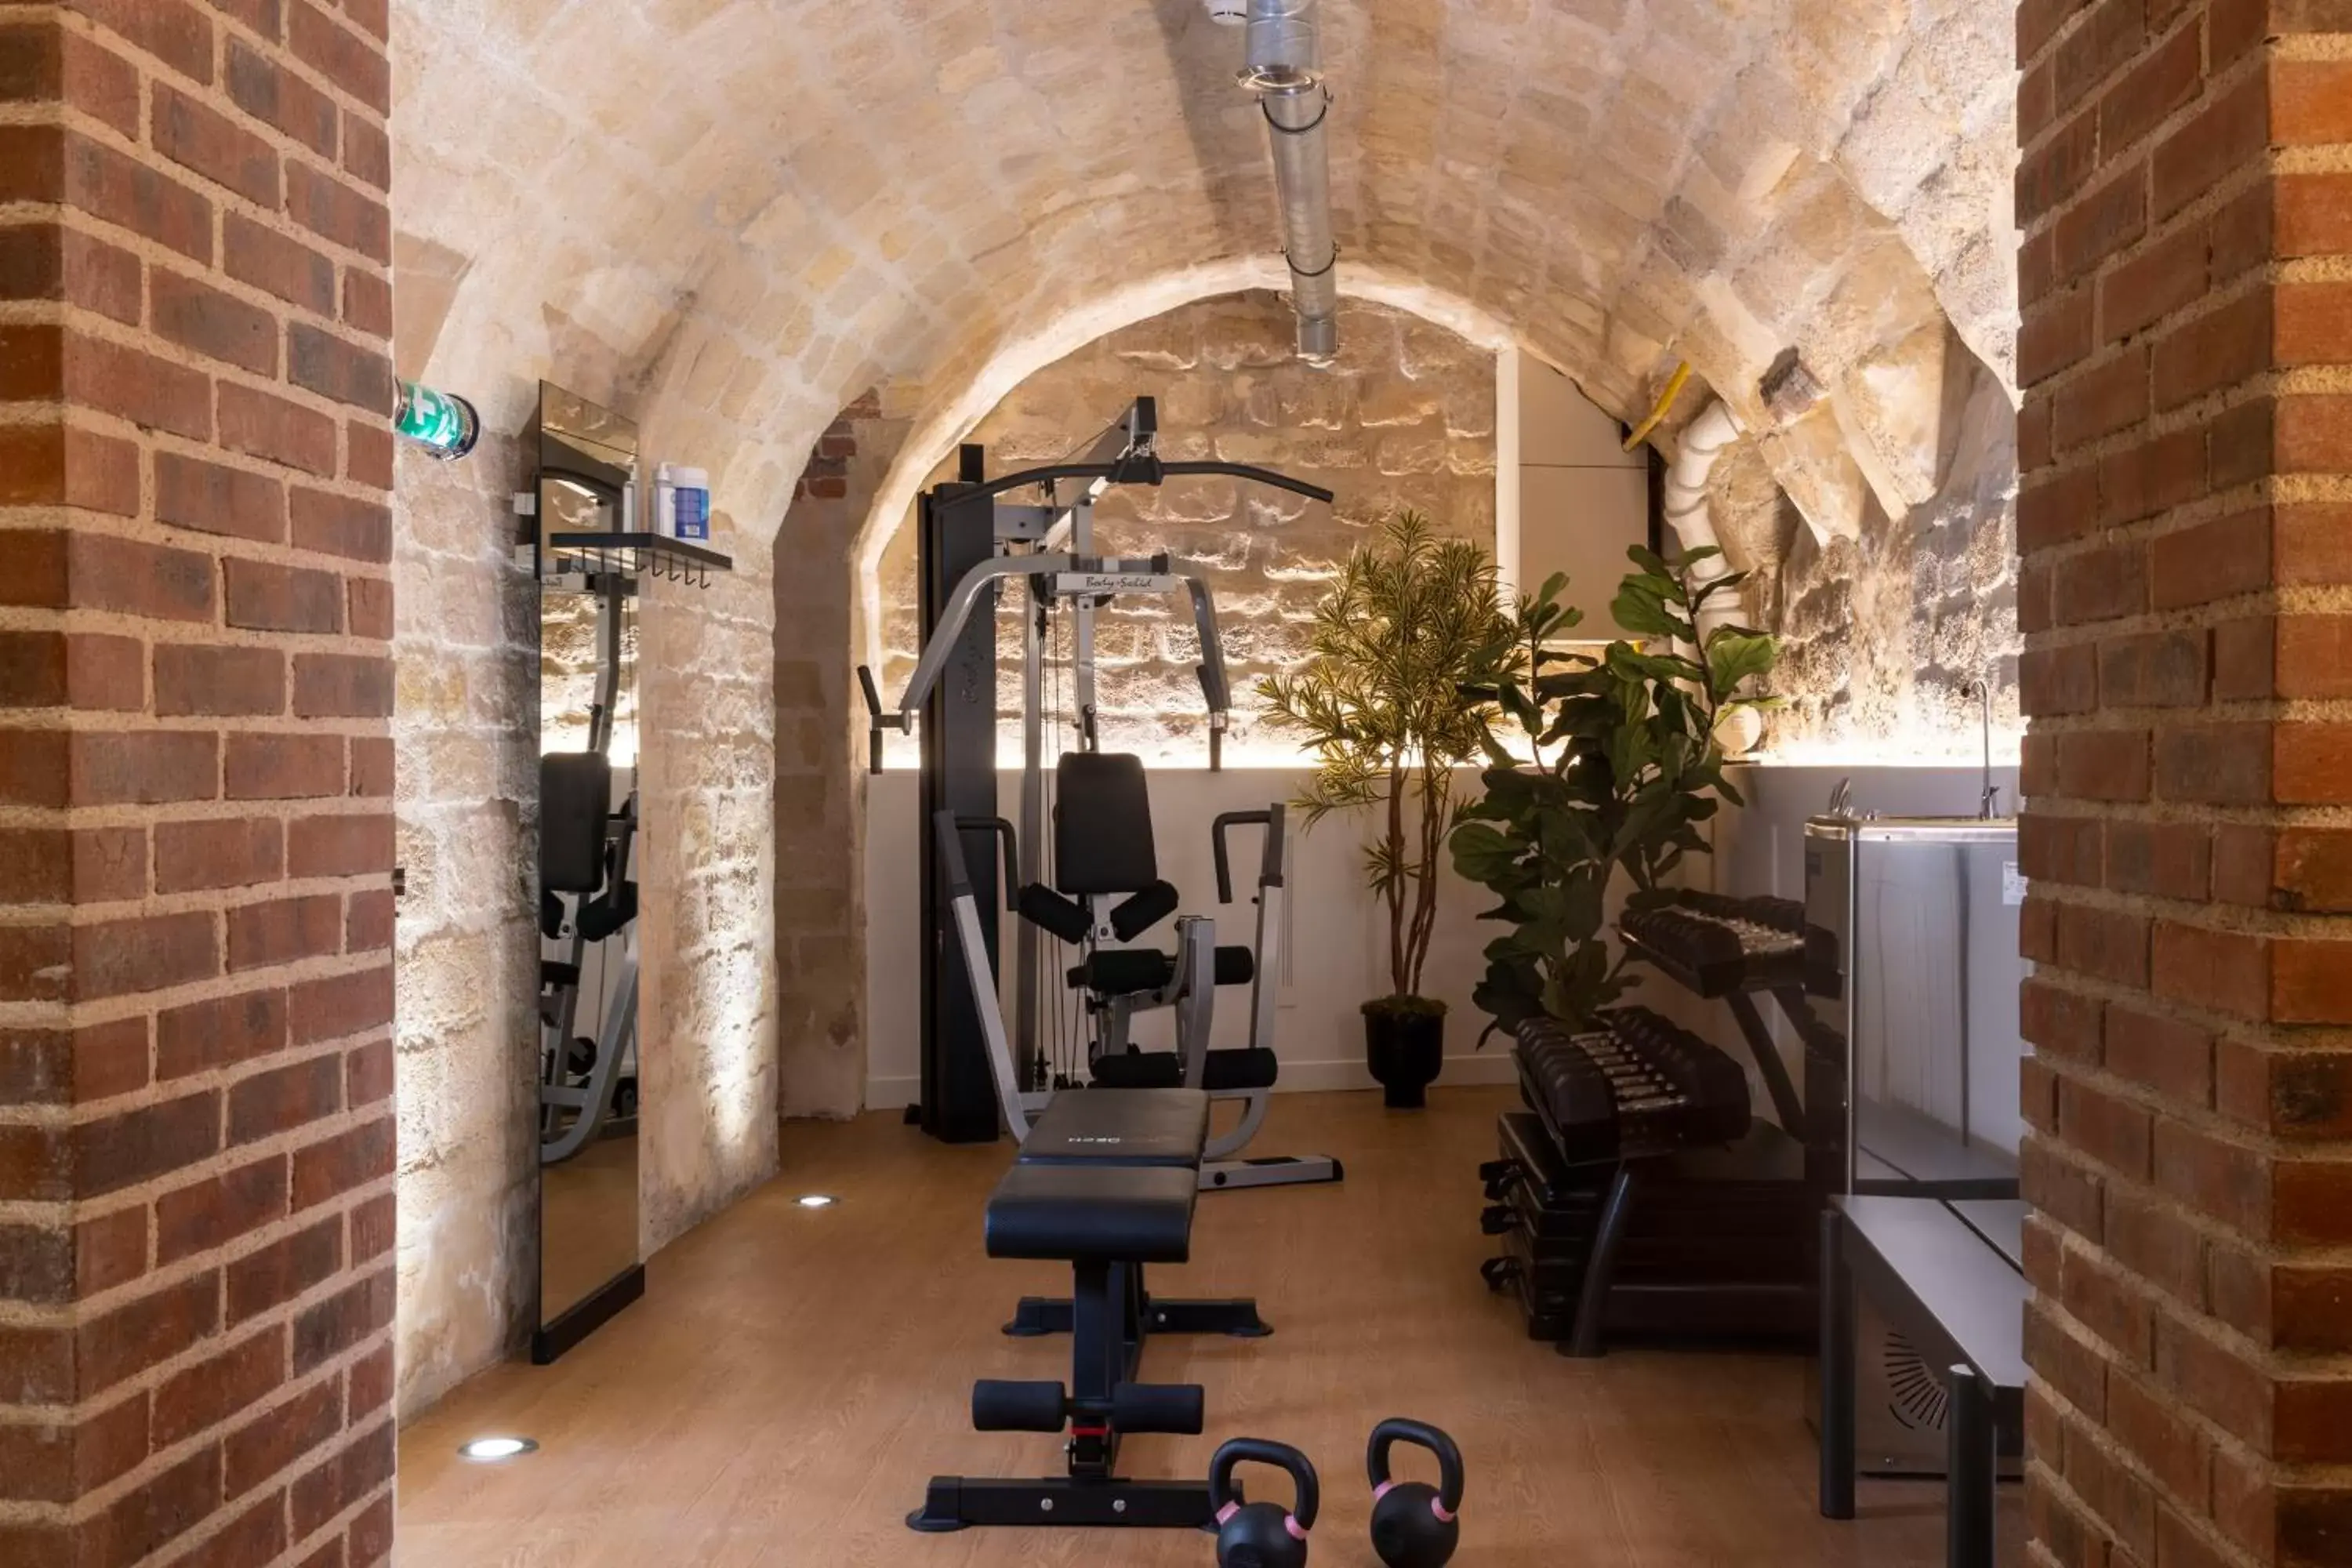 Fitness centre/facilities, Fitness Center/Facilities in Hotel Abbatial Saint Germain